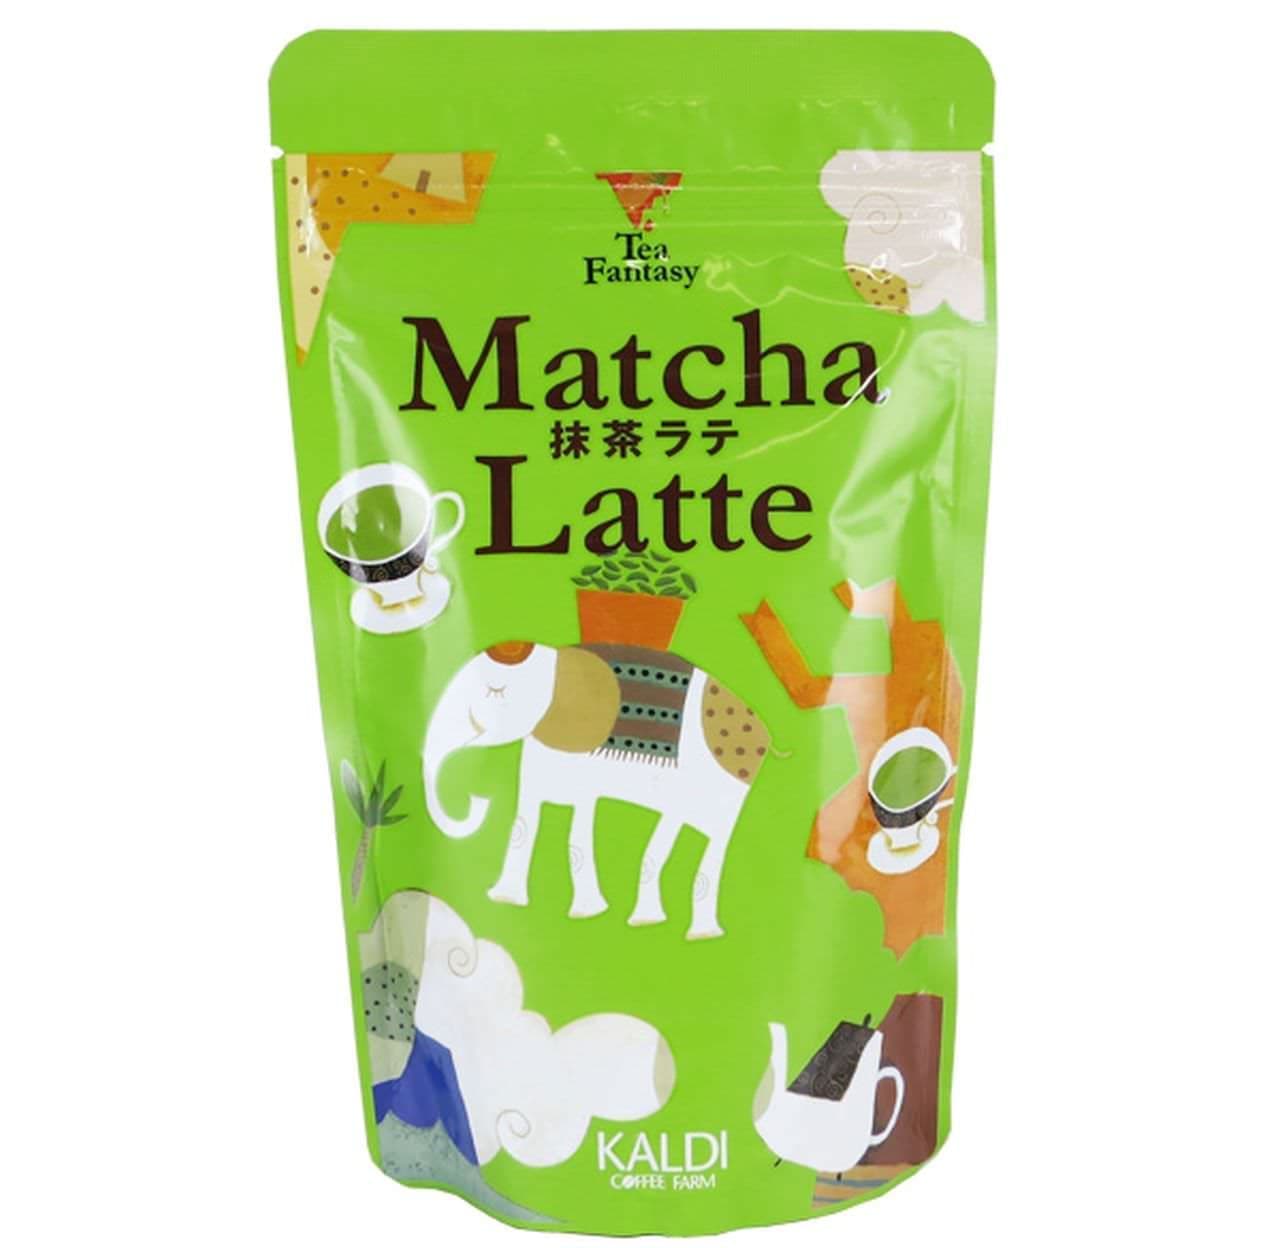 KALDI "Instant Matcha Latte"